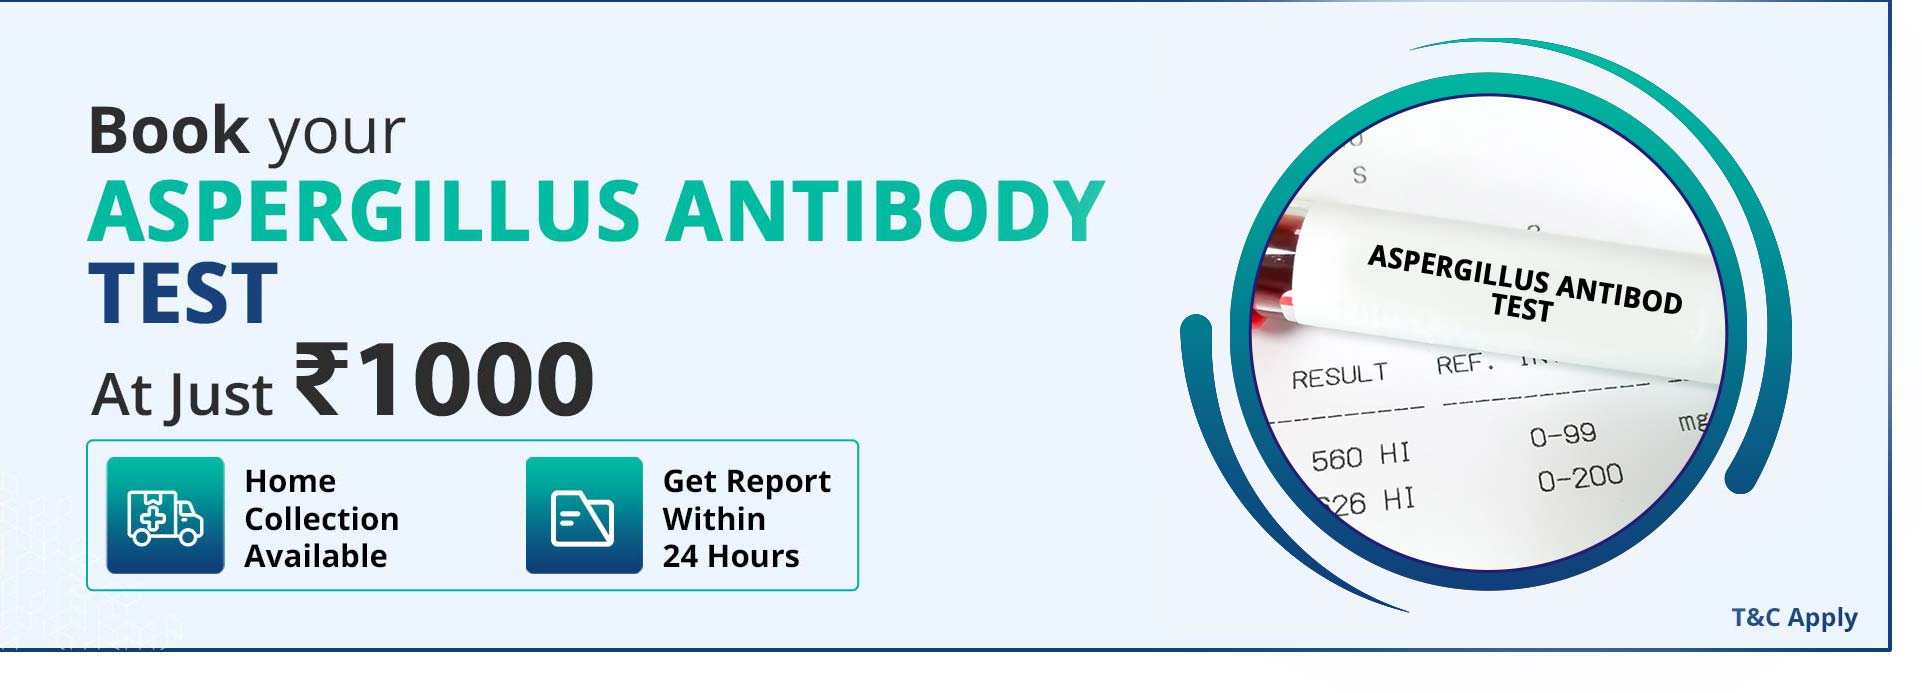 Aspergillus antibody test